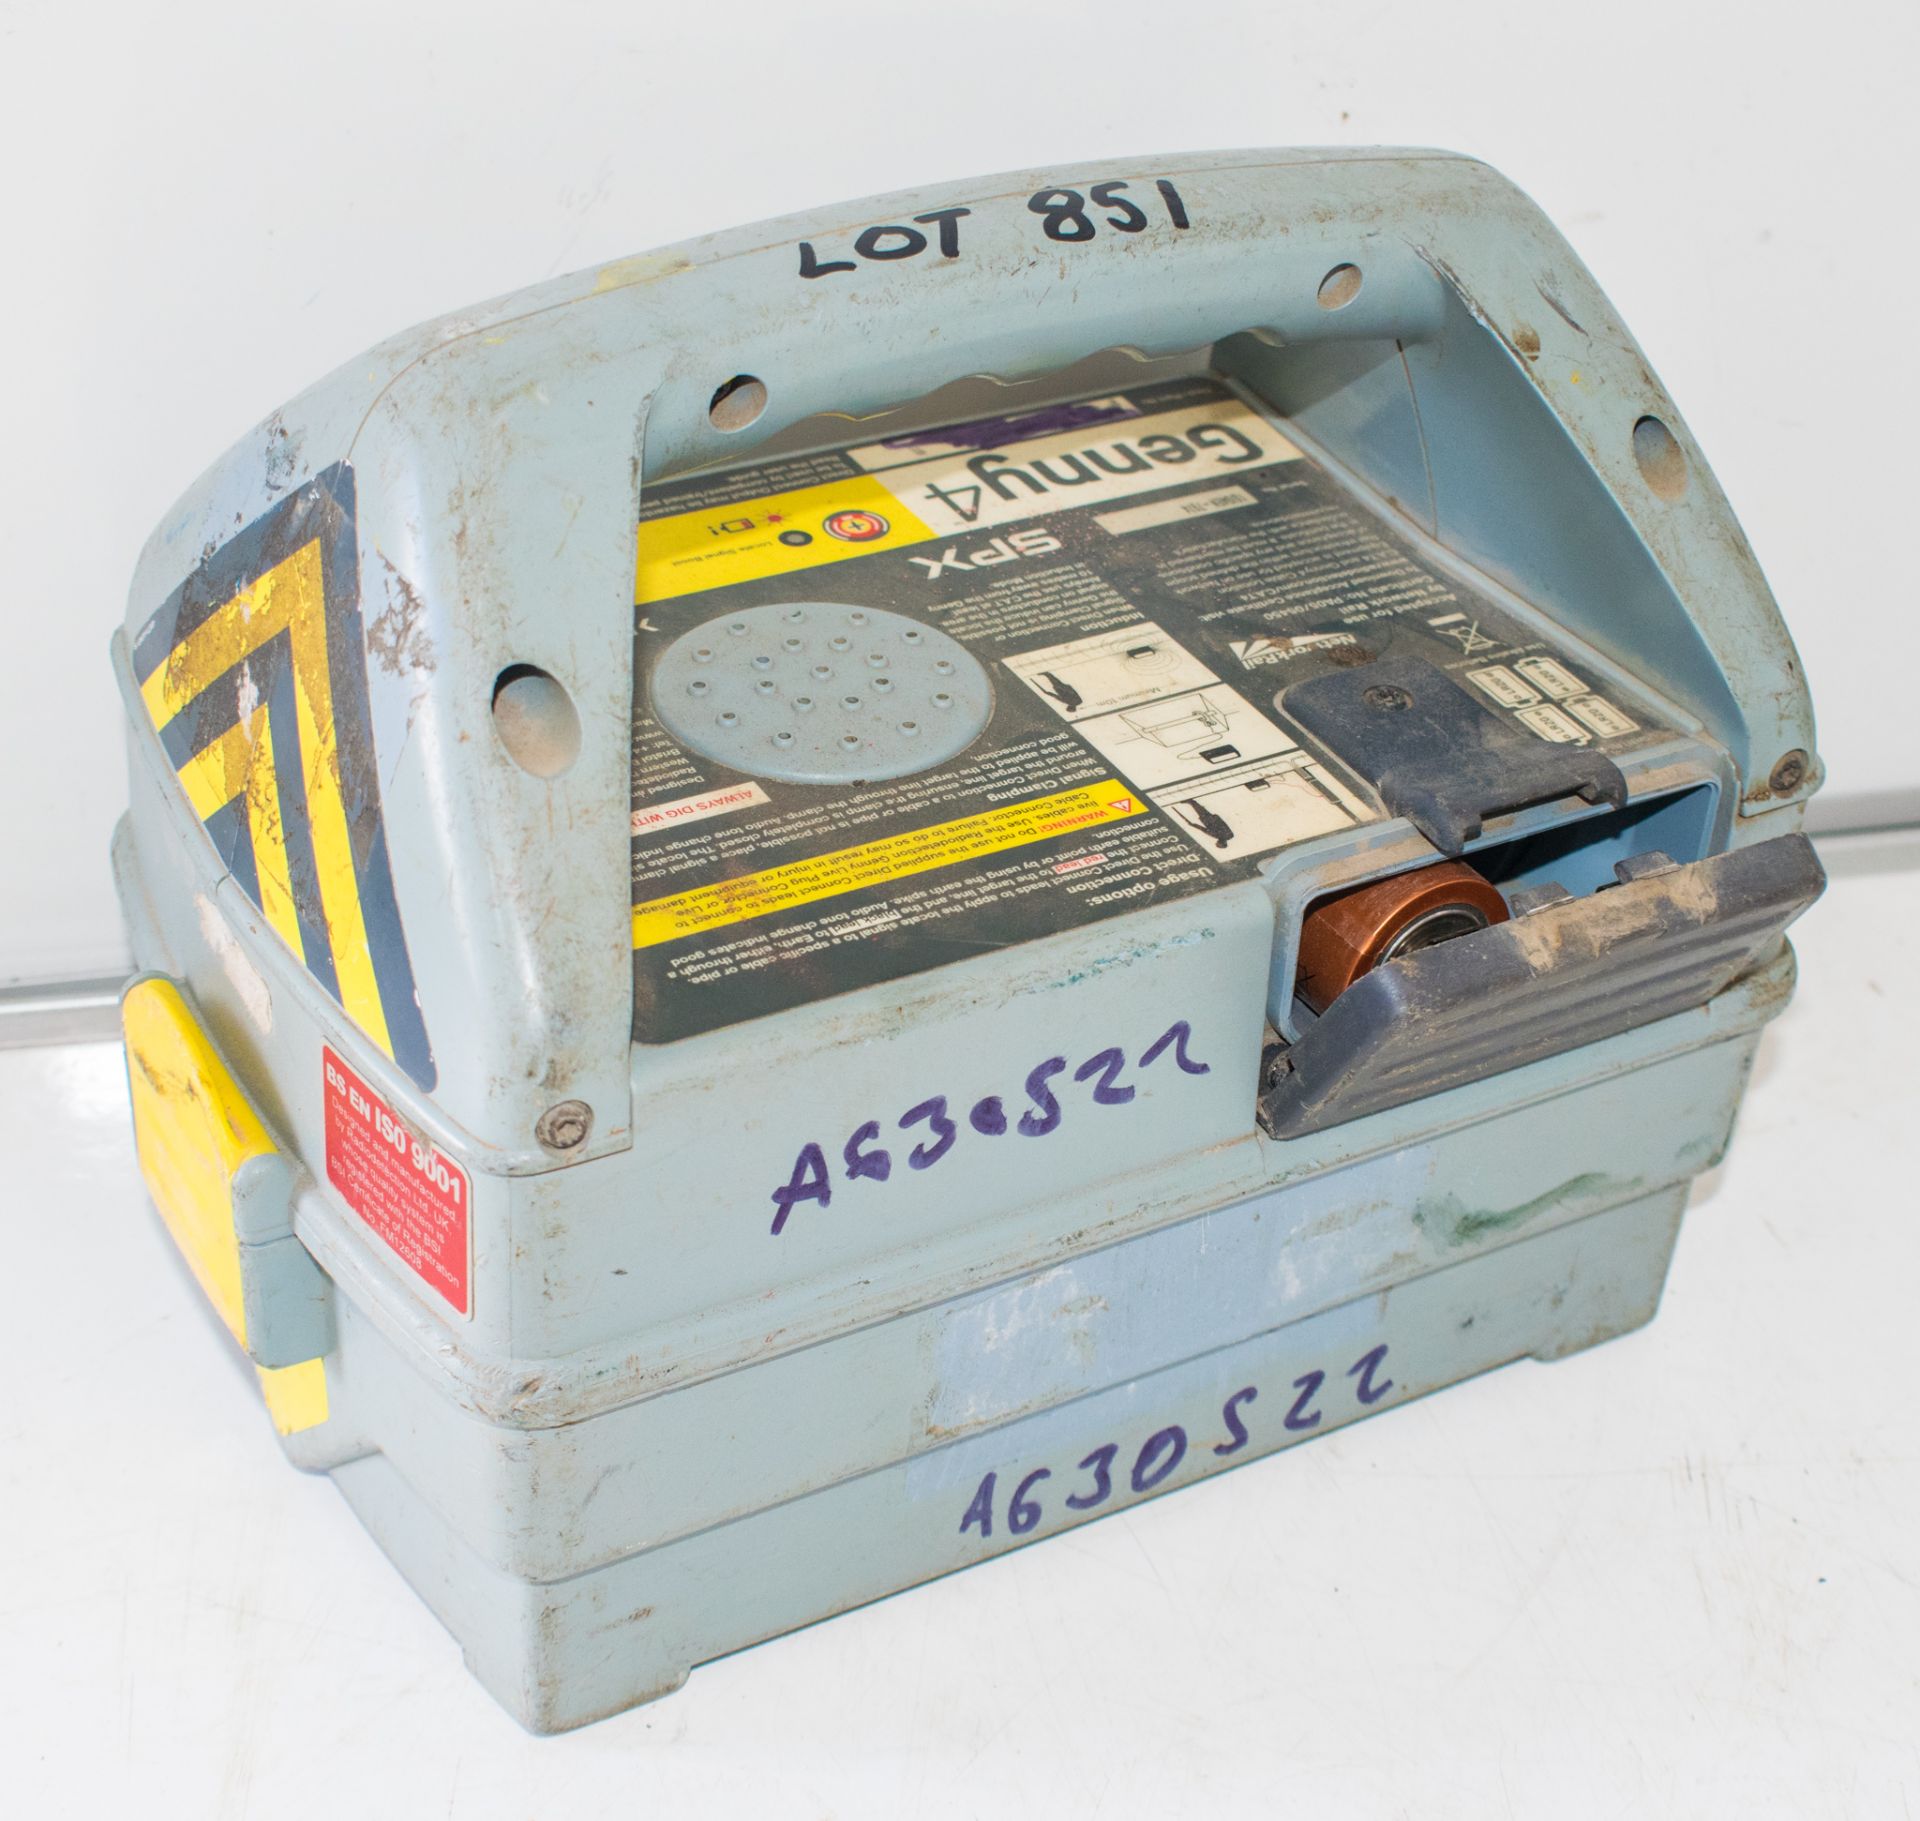 Radiodetection signal generator A630522